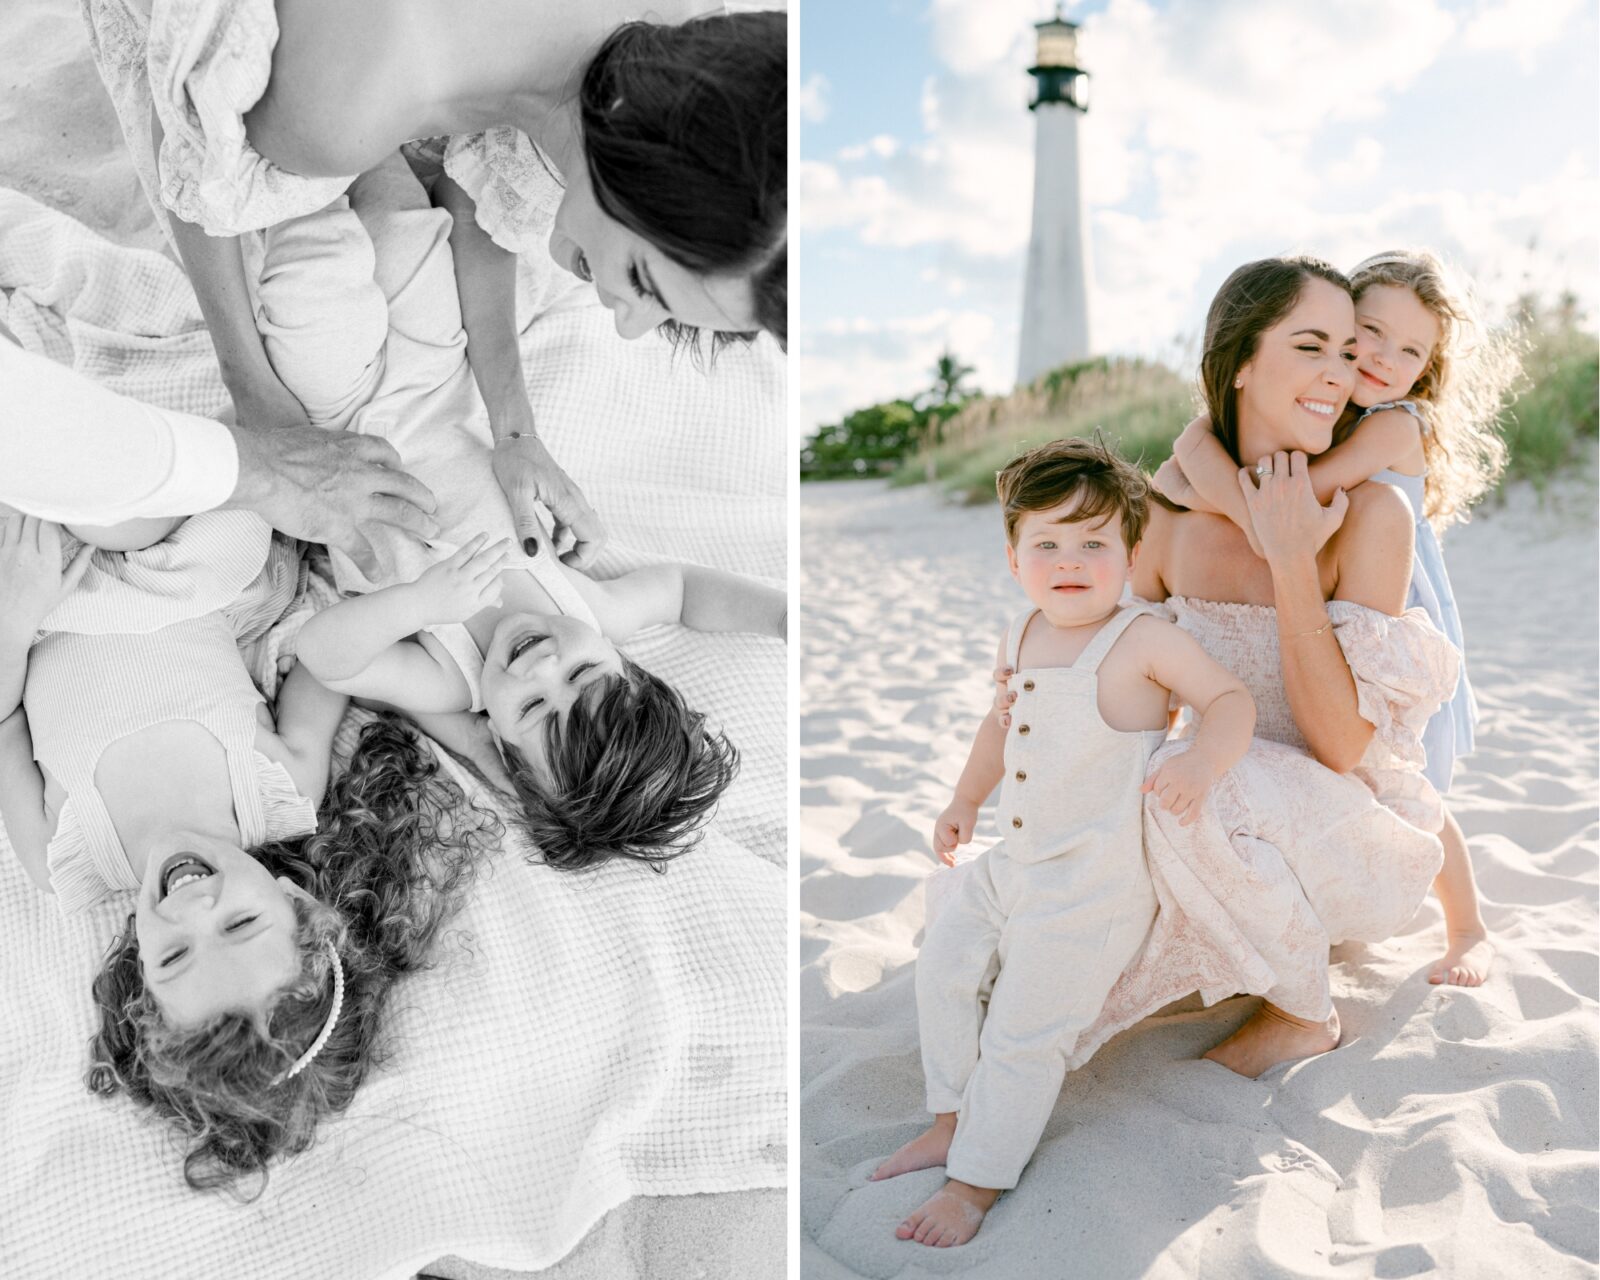 3 family photos tips - Miami Photographer: tickle the kids